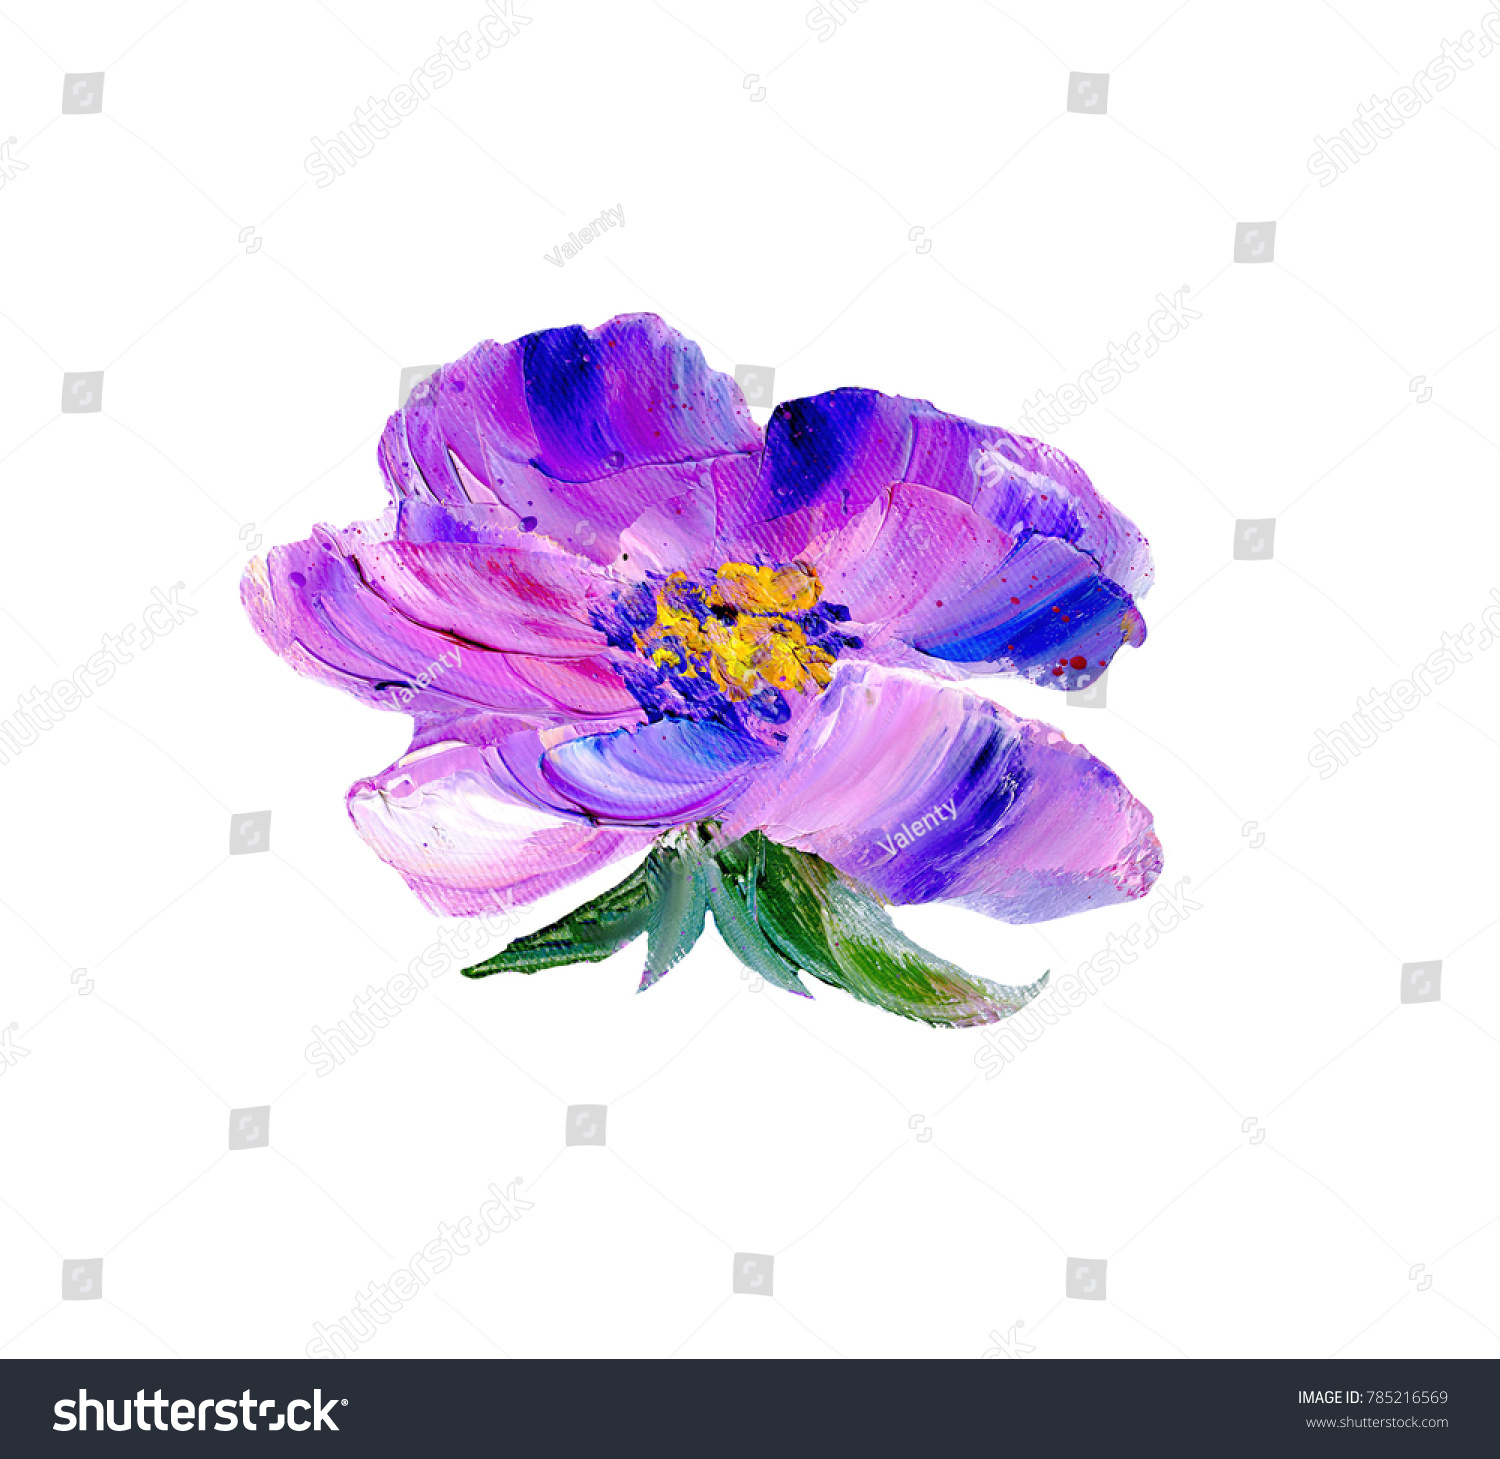 584,063 Flower oil Images, Stock Photos & Vectors | Shutterstock